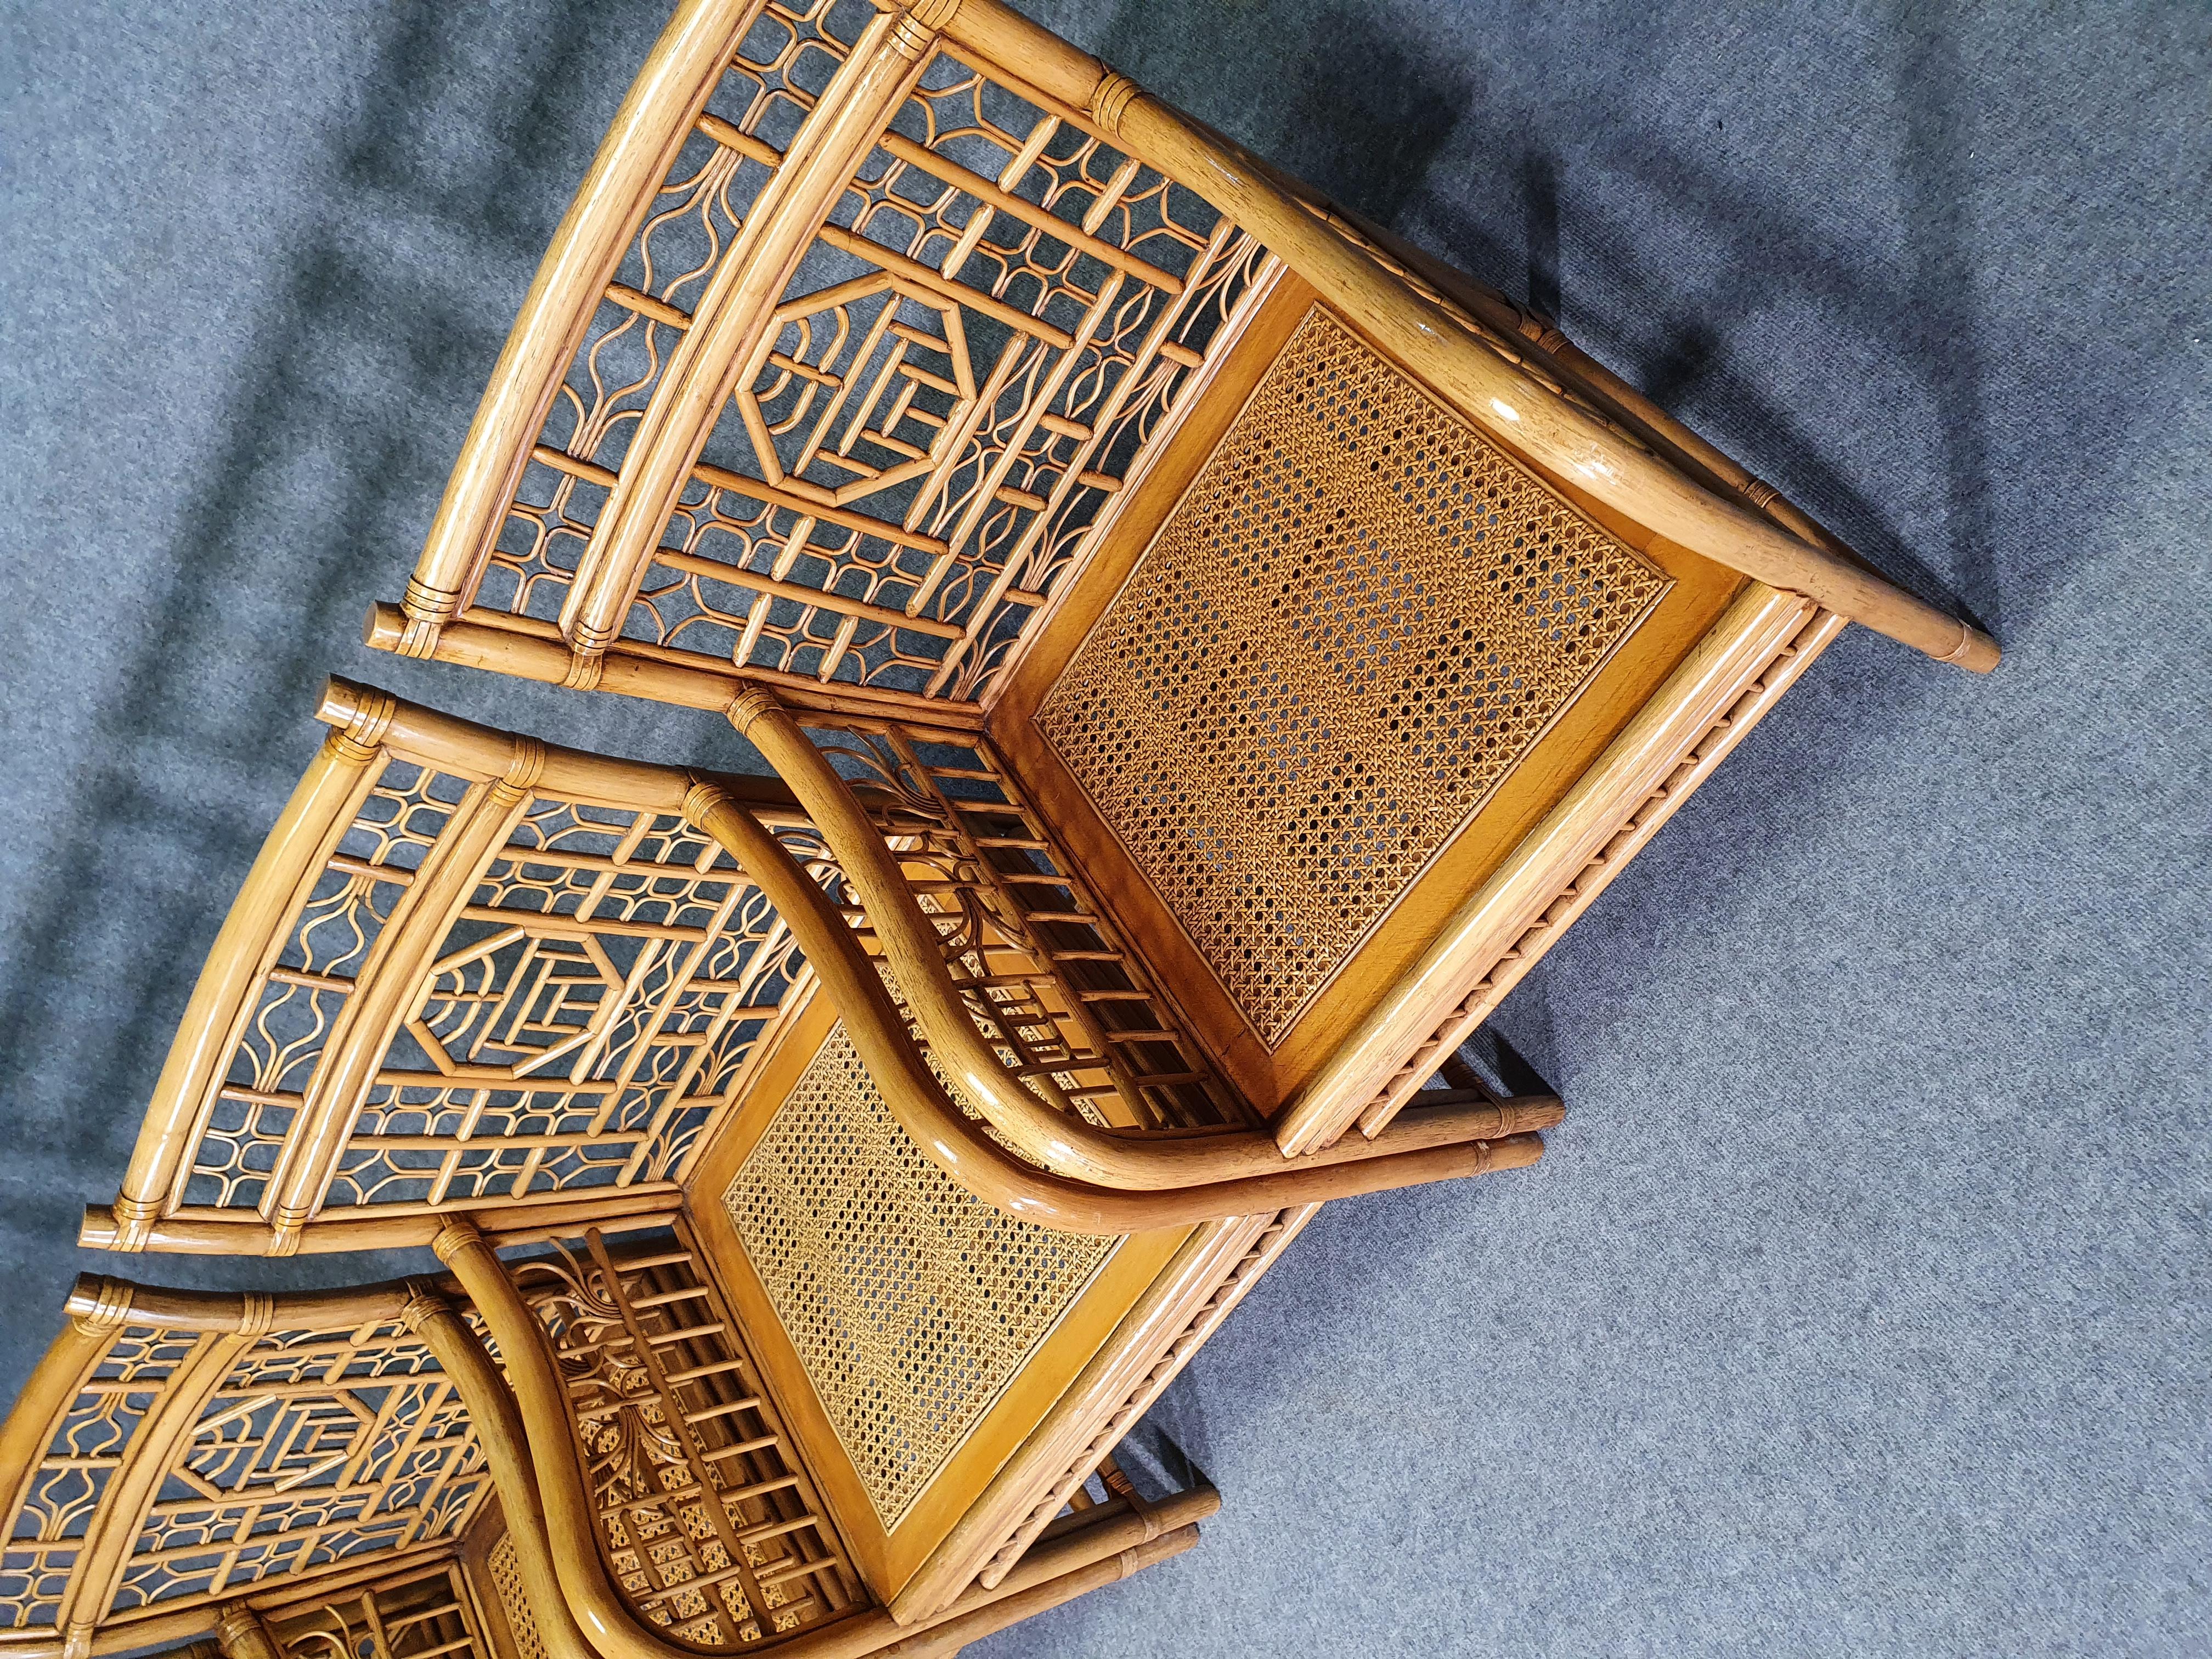 Fin du 20e siècle 4 x Chaise en rotin Mcguire marquée Chinois / Chinoiserie Chique bamboo en vente